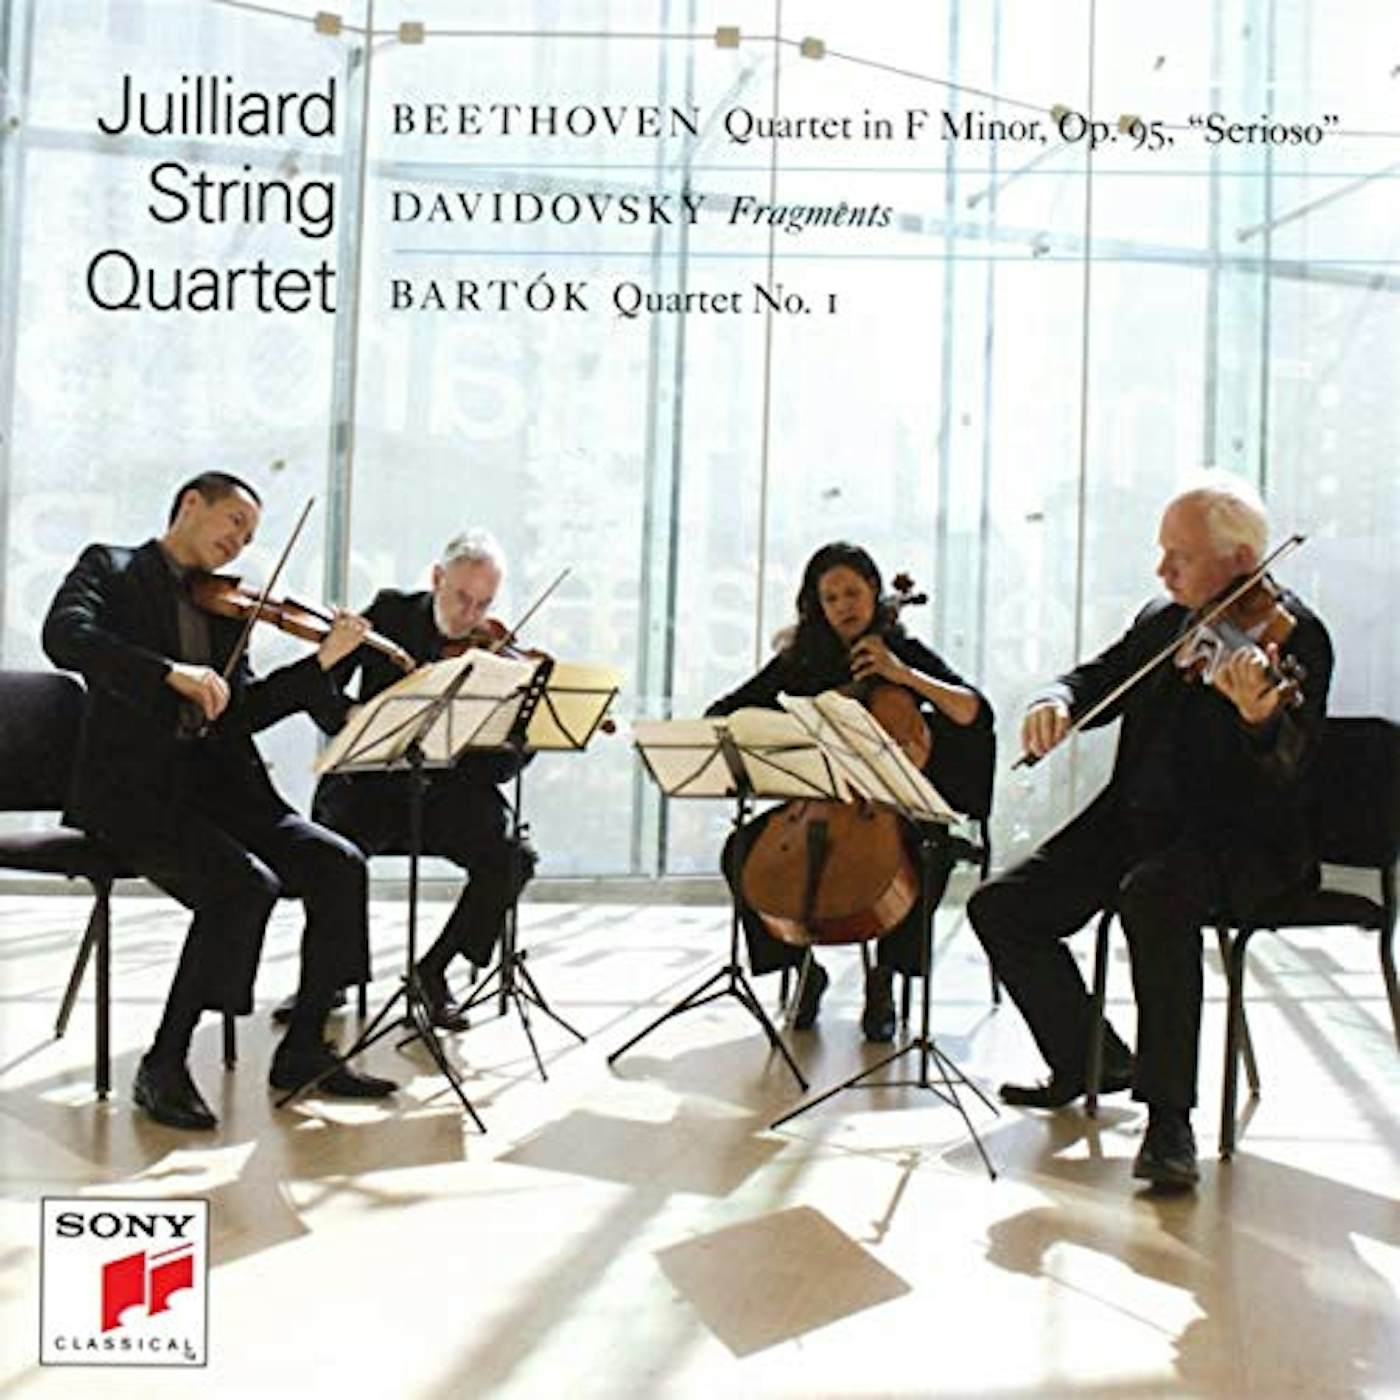 Juilliard String Quartet BEETHOVEN / DAVIDOVSKY / BARTOK CD